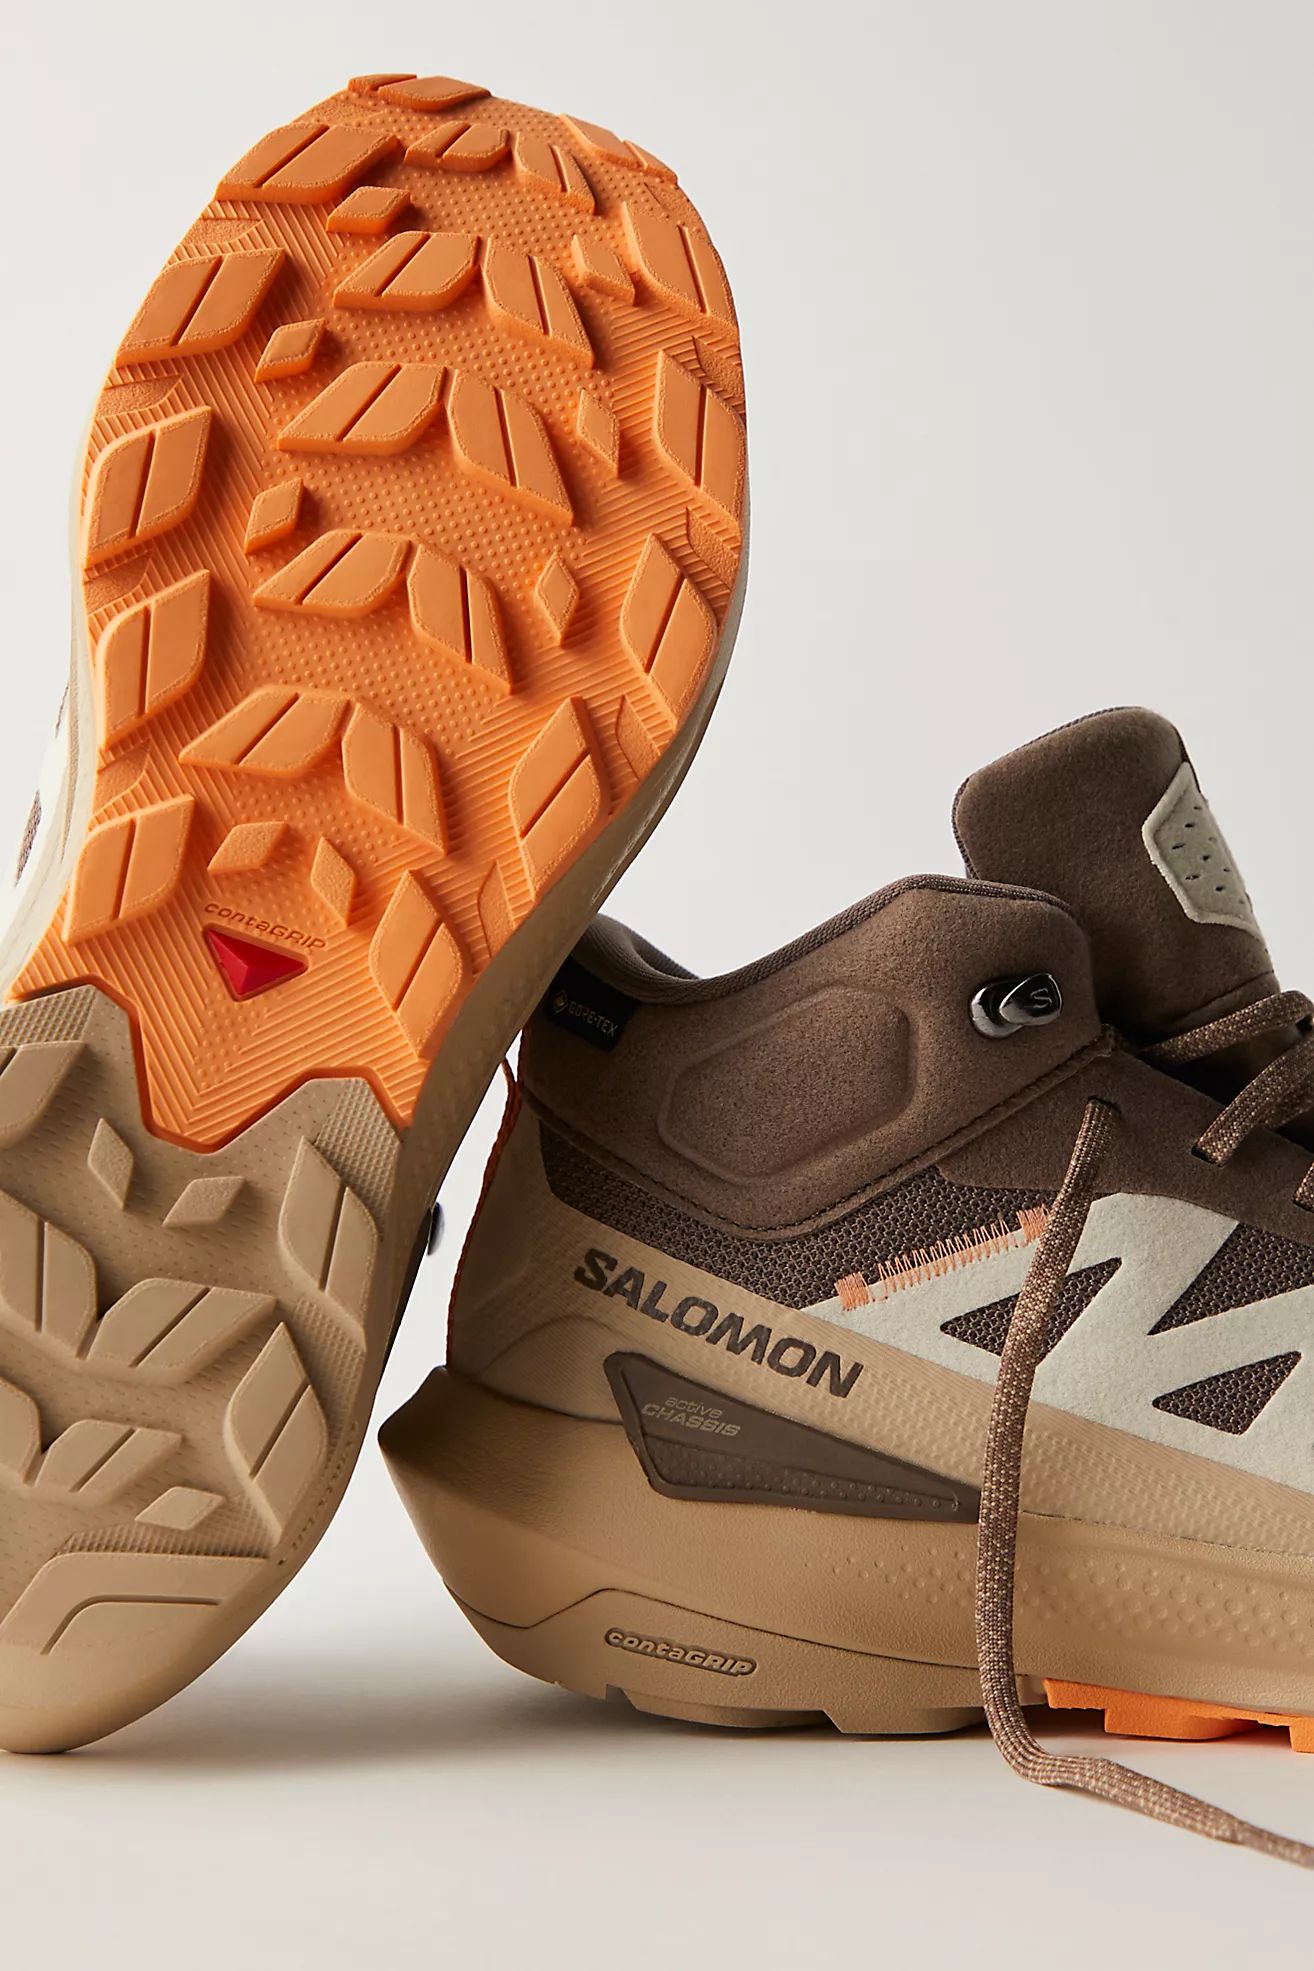 Salomon Elixir Activ Mid Sneaker Boots | Free People (Global - UK&FR Excluded)